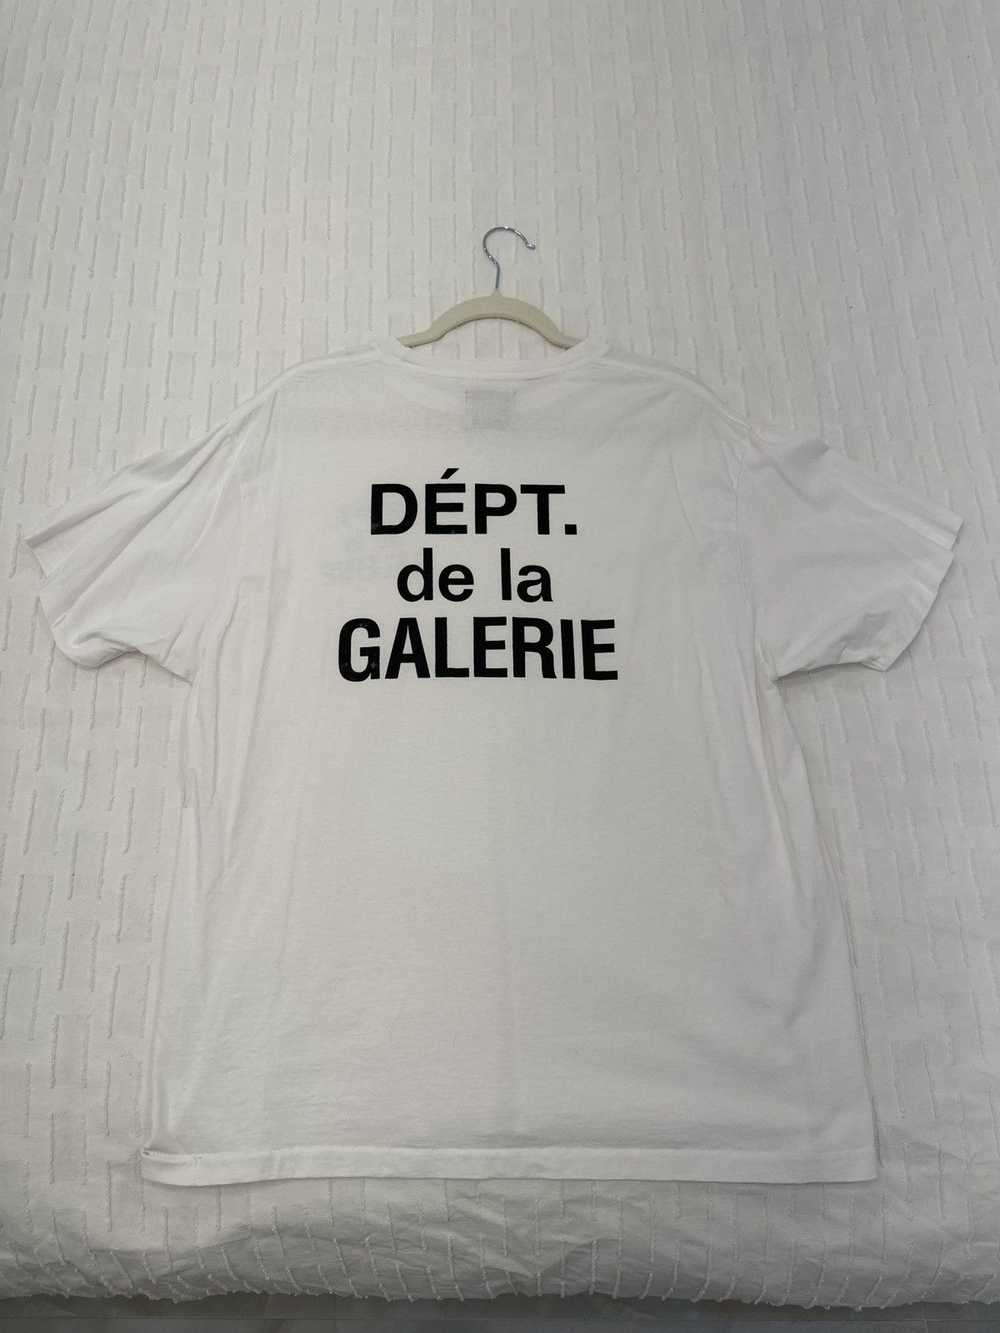 Gallery Dept. Gallery dept t shirt - image 2